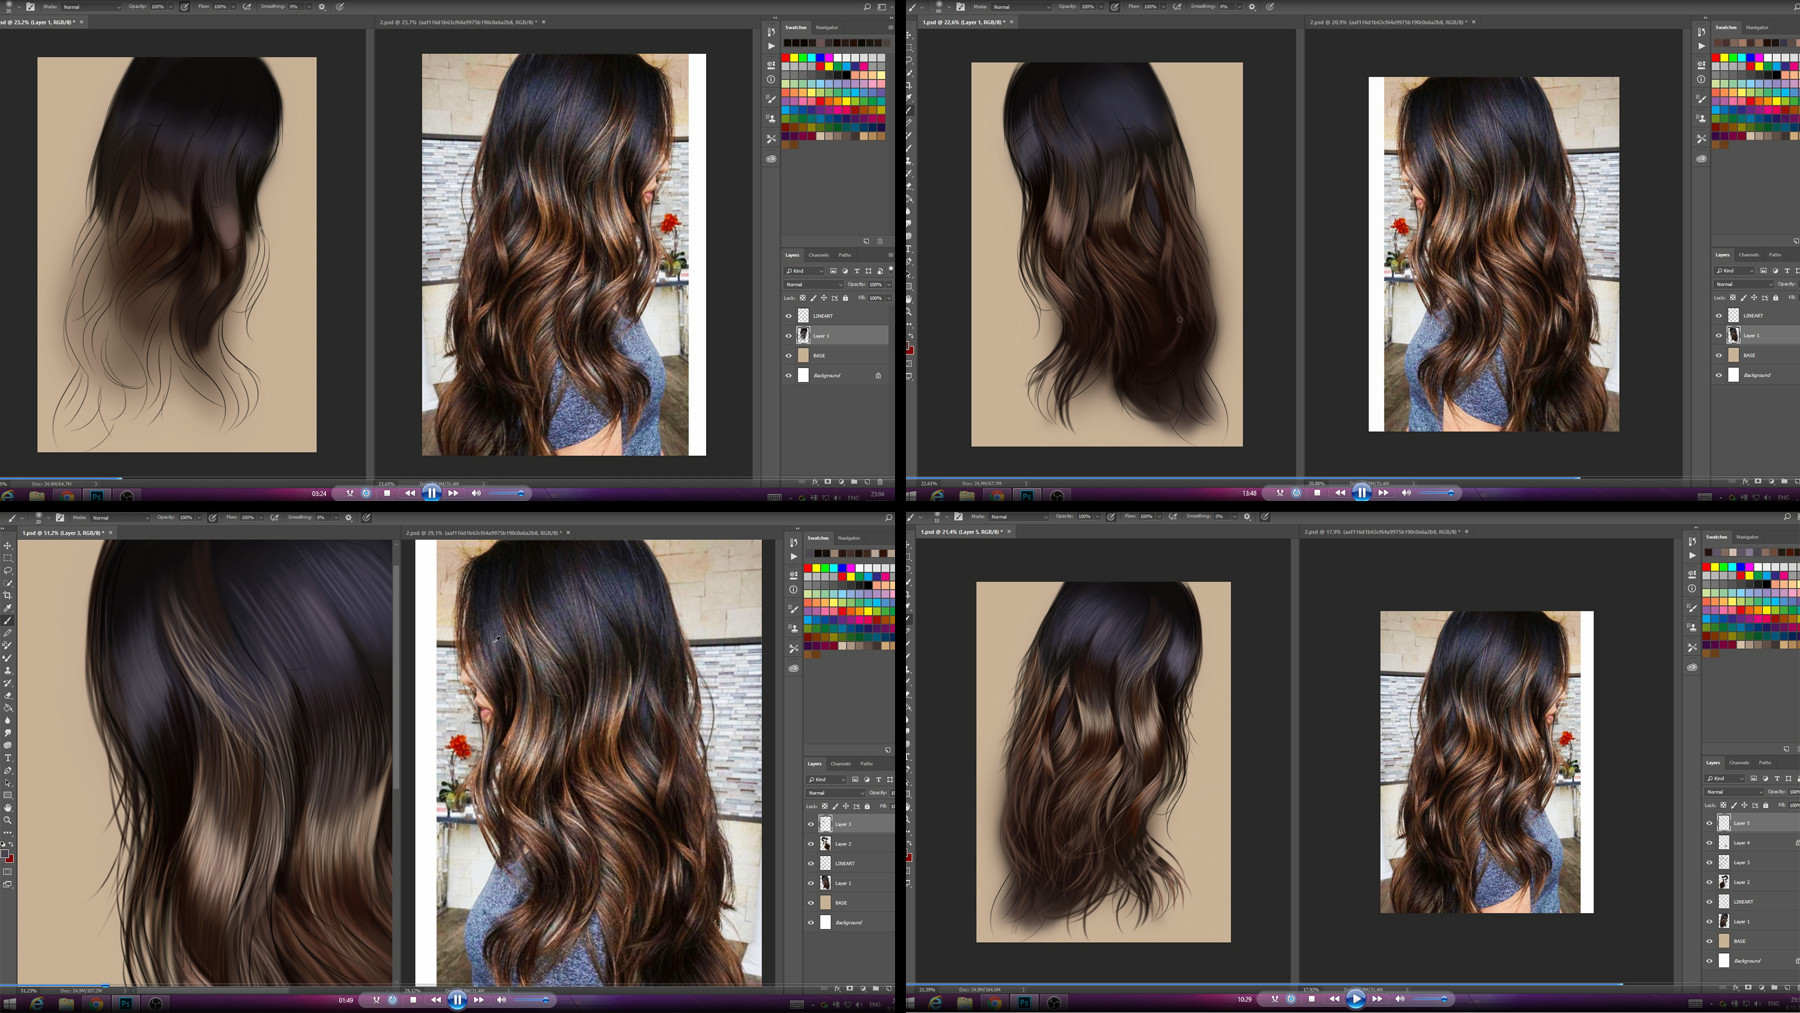 ArtStation - Hair Painting In Photoshop - Video Tutorial | Tutorials